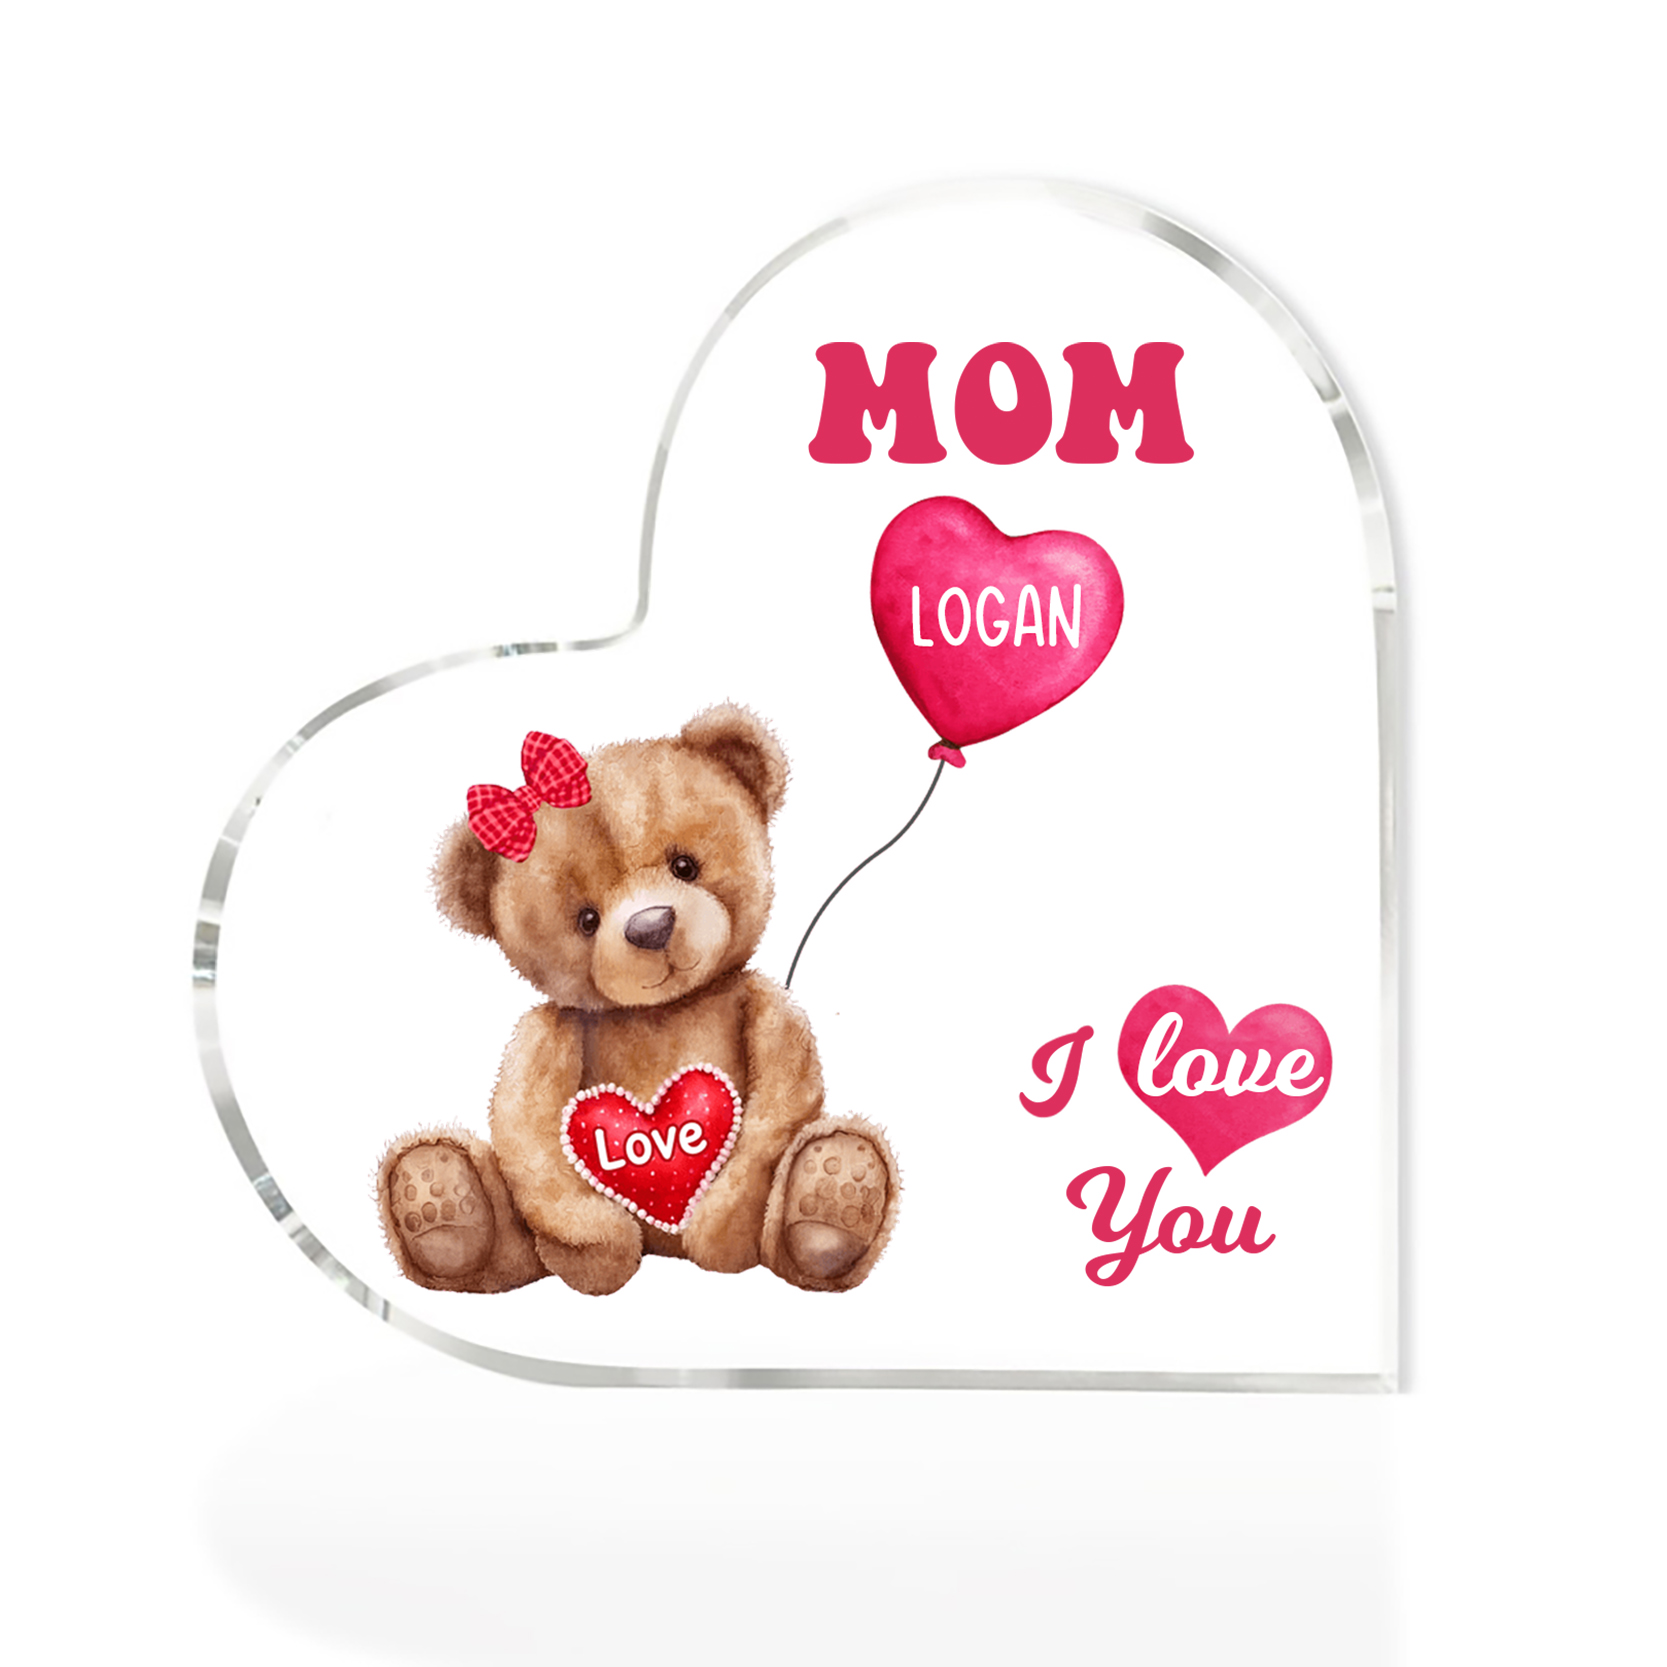 1 Name-Personalized Bear Acrylic Heart Keepsake Custom Text Acrylic Plaque Ornaments Gifts for Mum